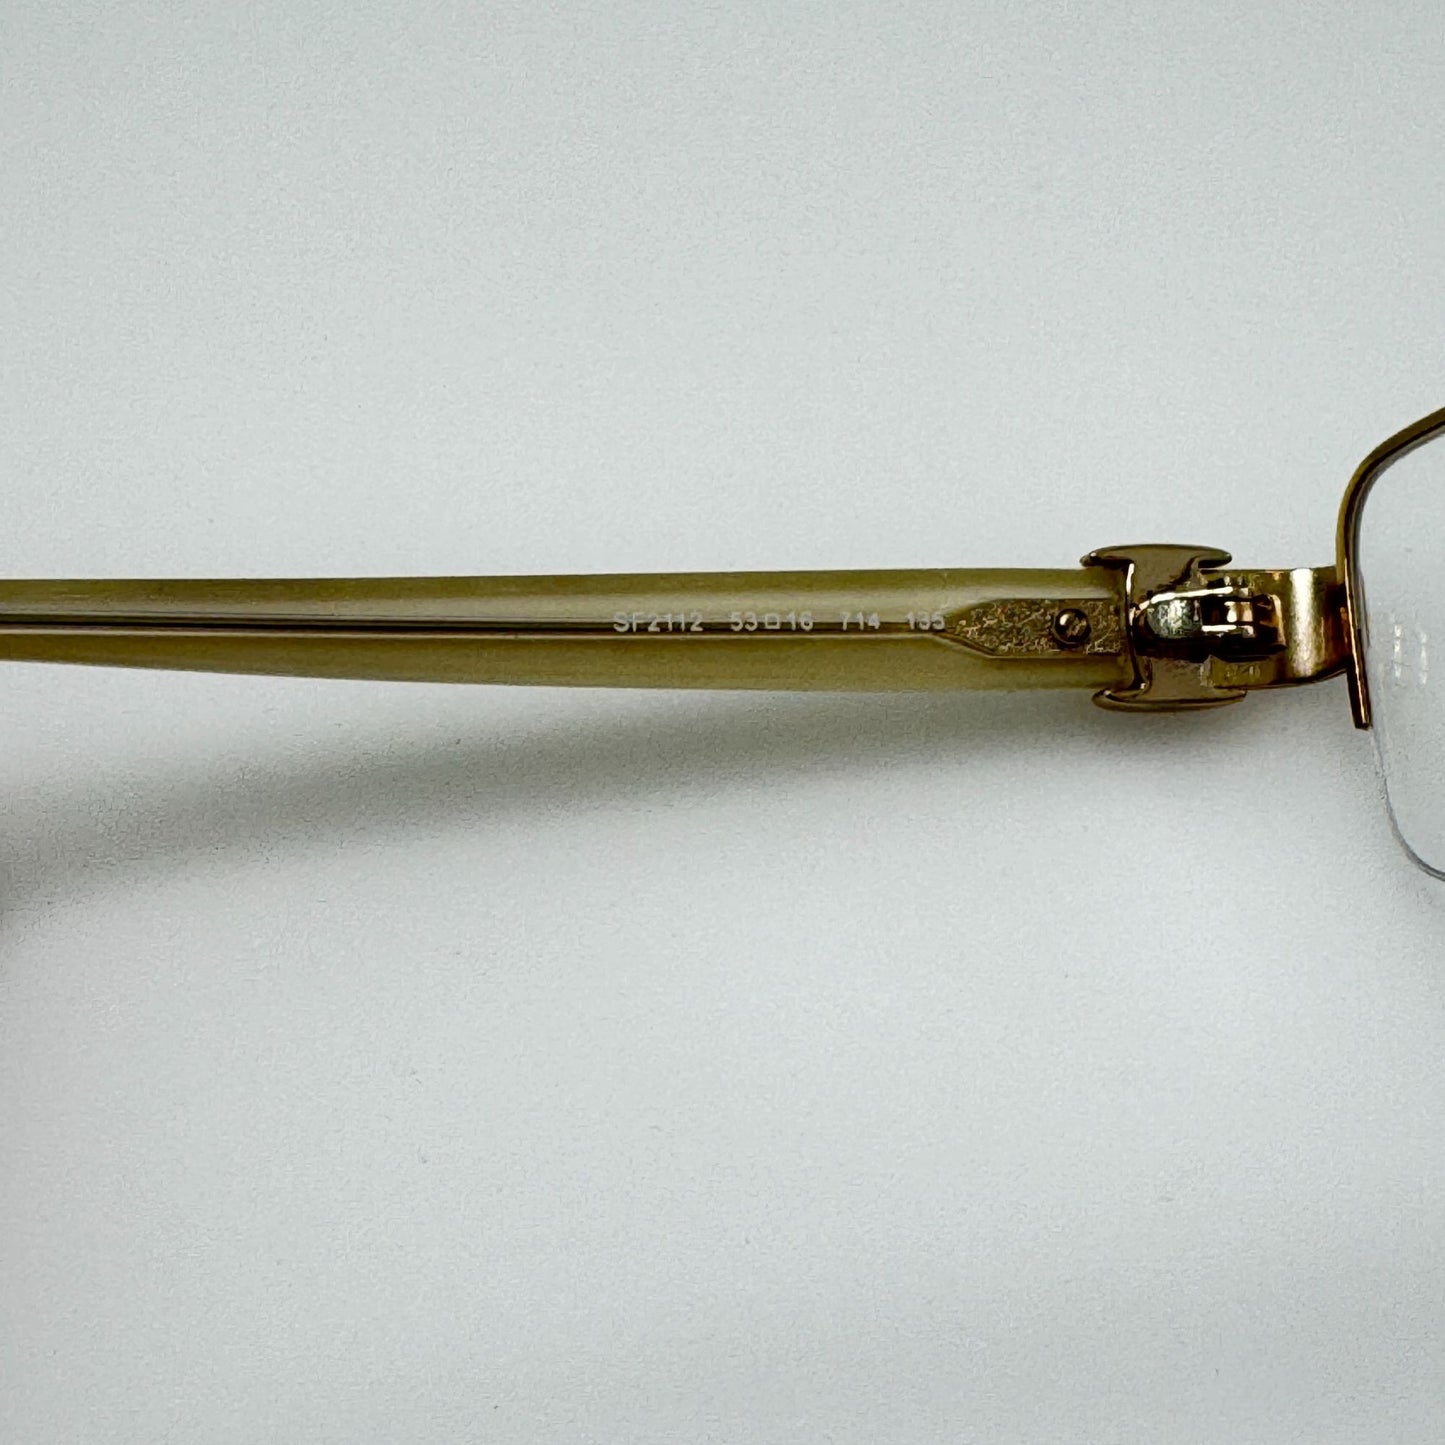 Salvatore Ferragamo Eyeglasses Eye Glasses Frames SF2112 714 53-16-135